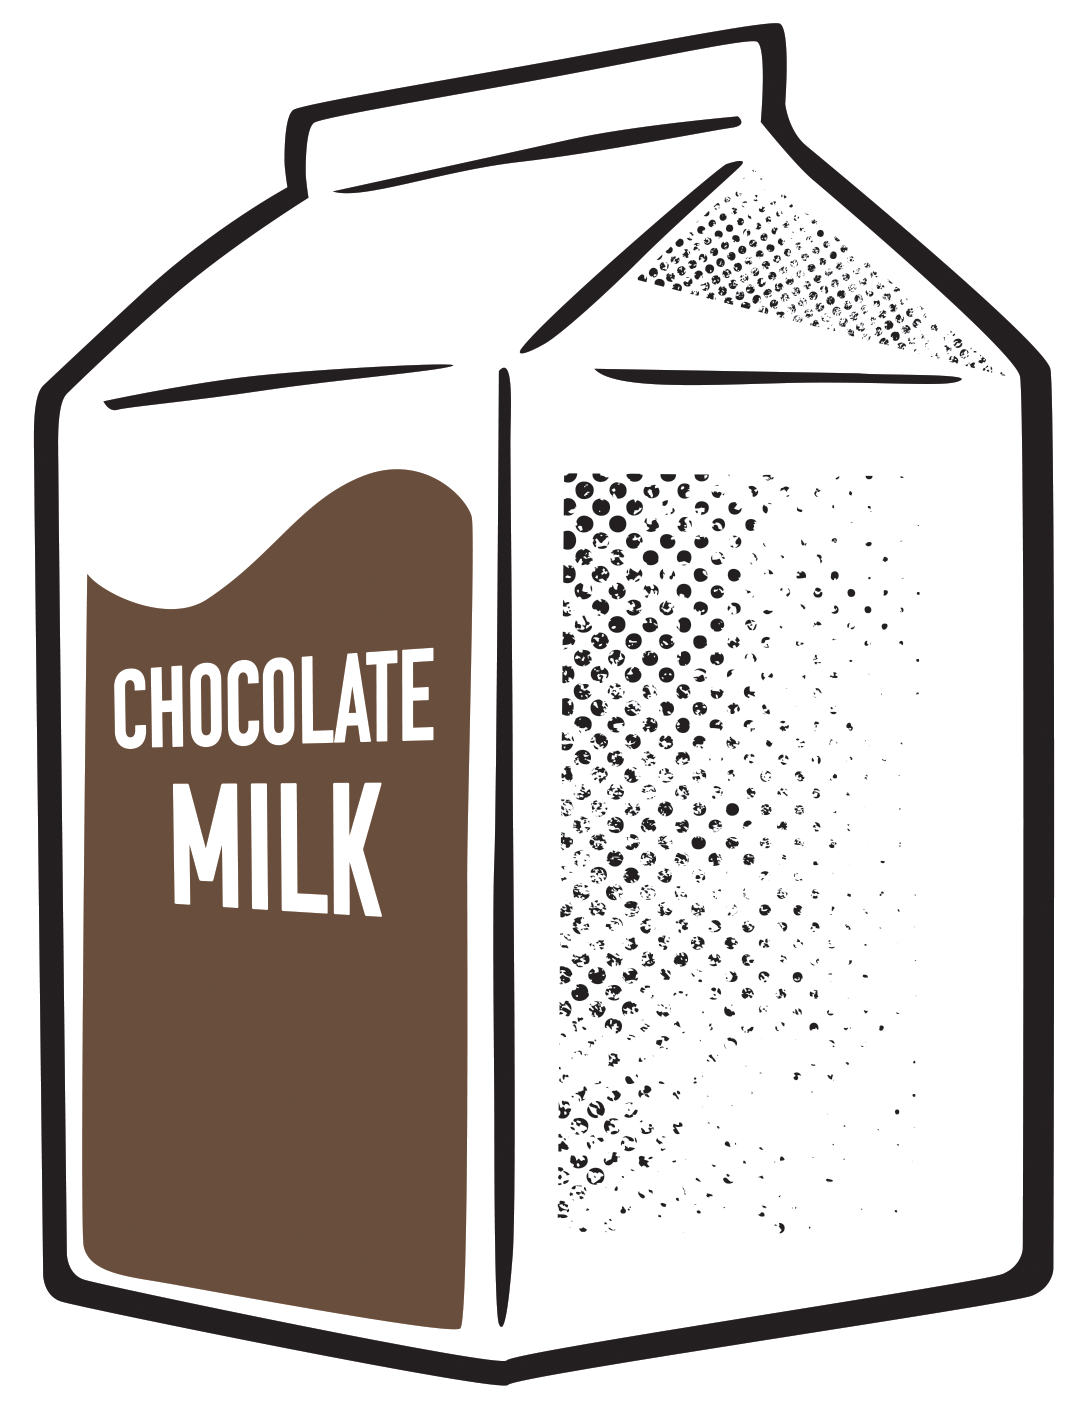 Chocolate milk Play Every Day image